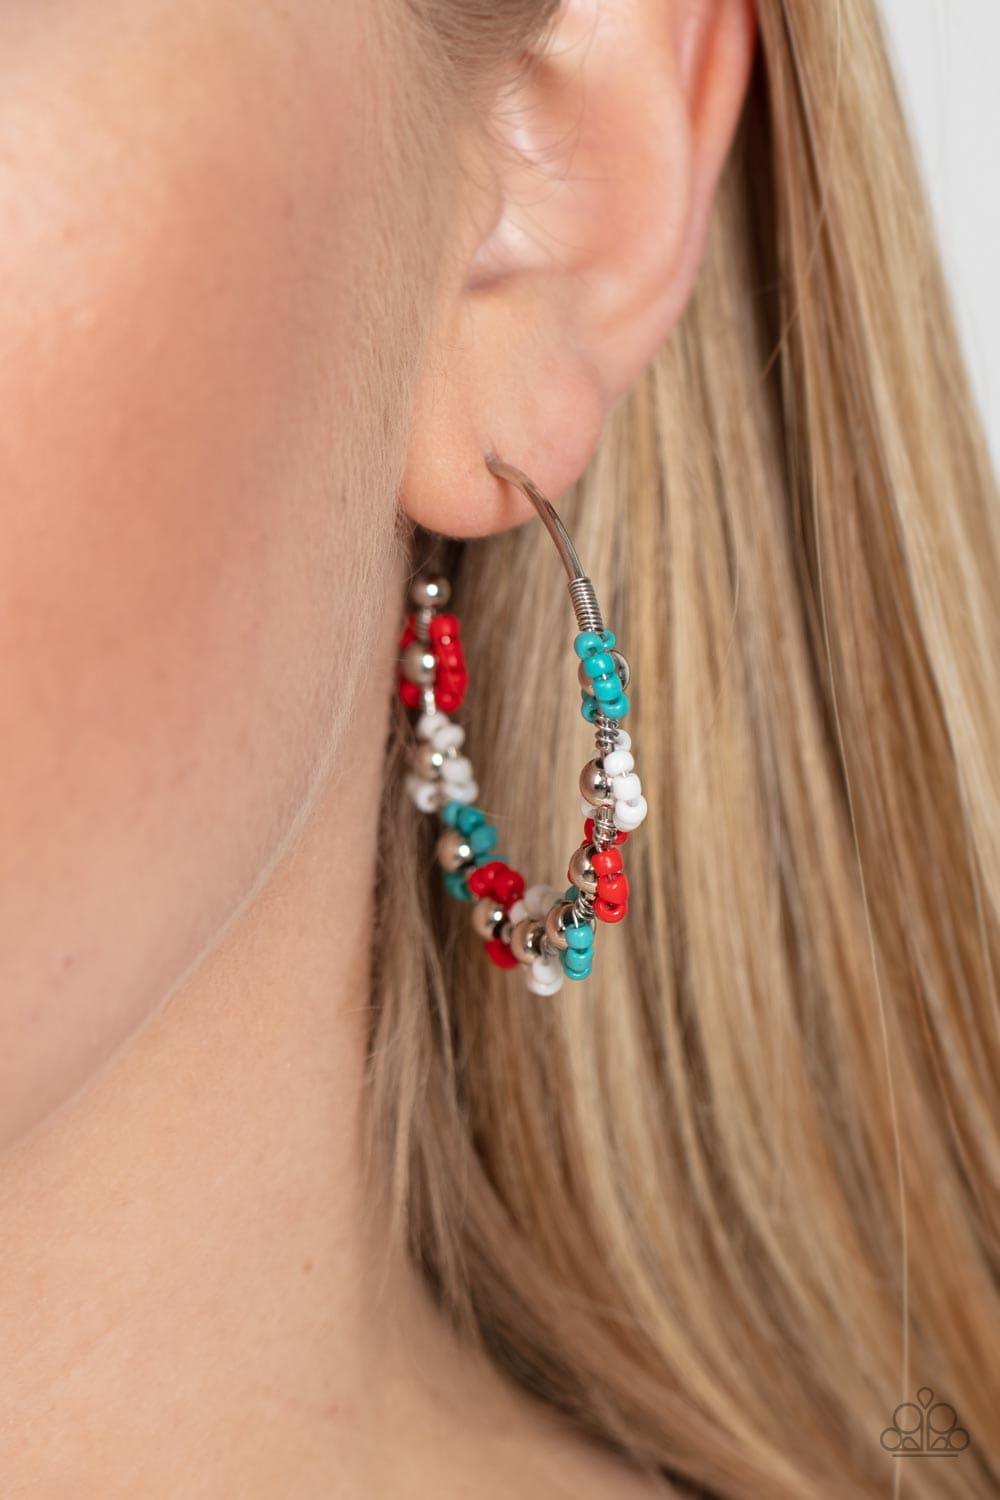 Paparazzi Accessories - Growth Spurt - Red Hoop Earrings - Bling by JessieK